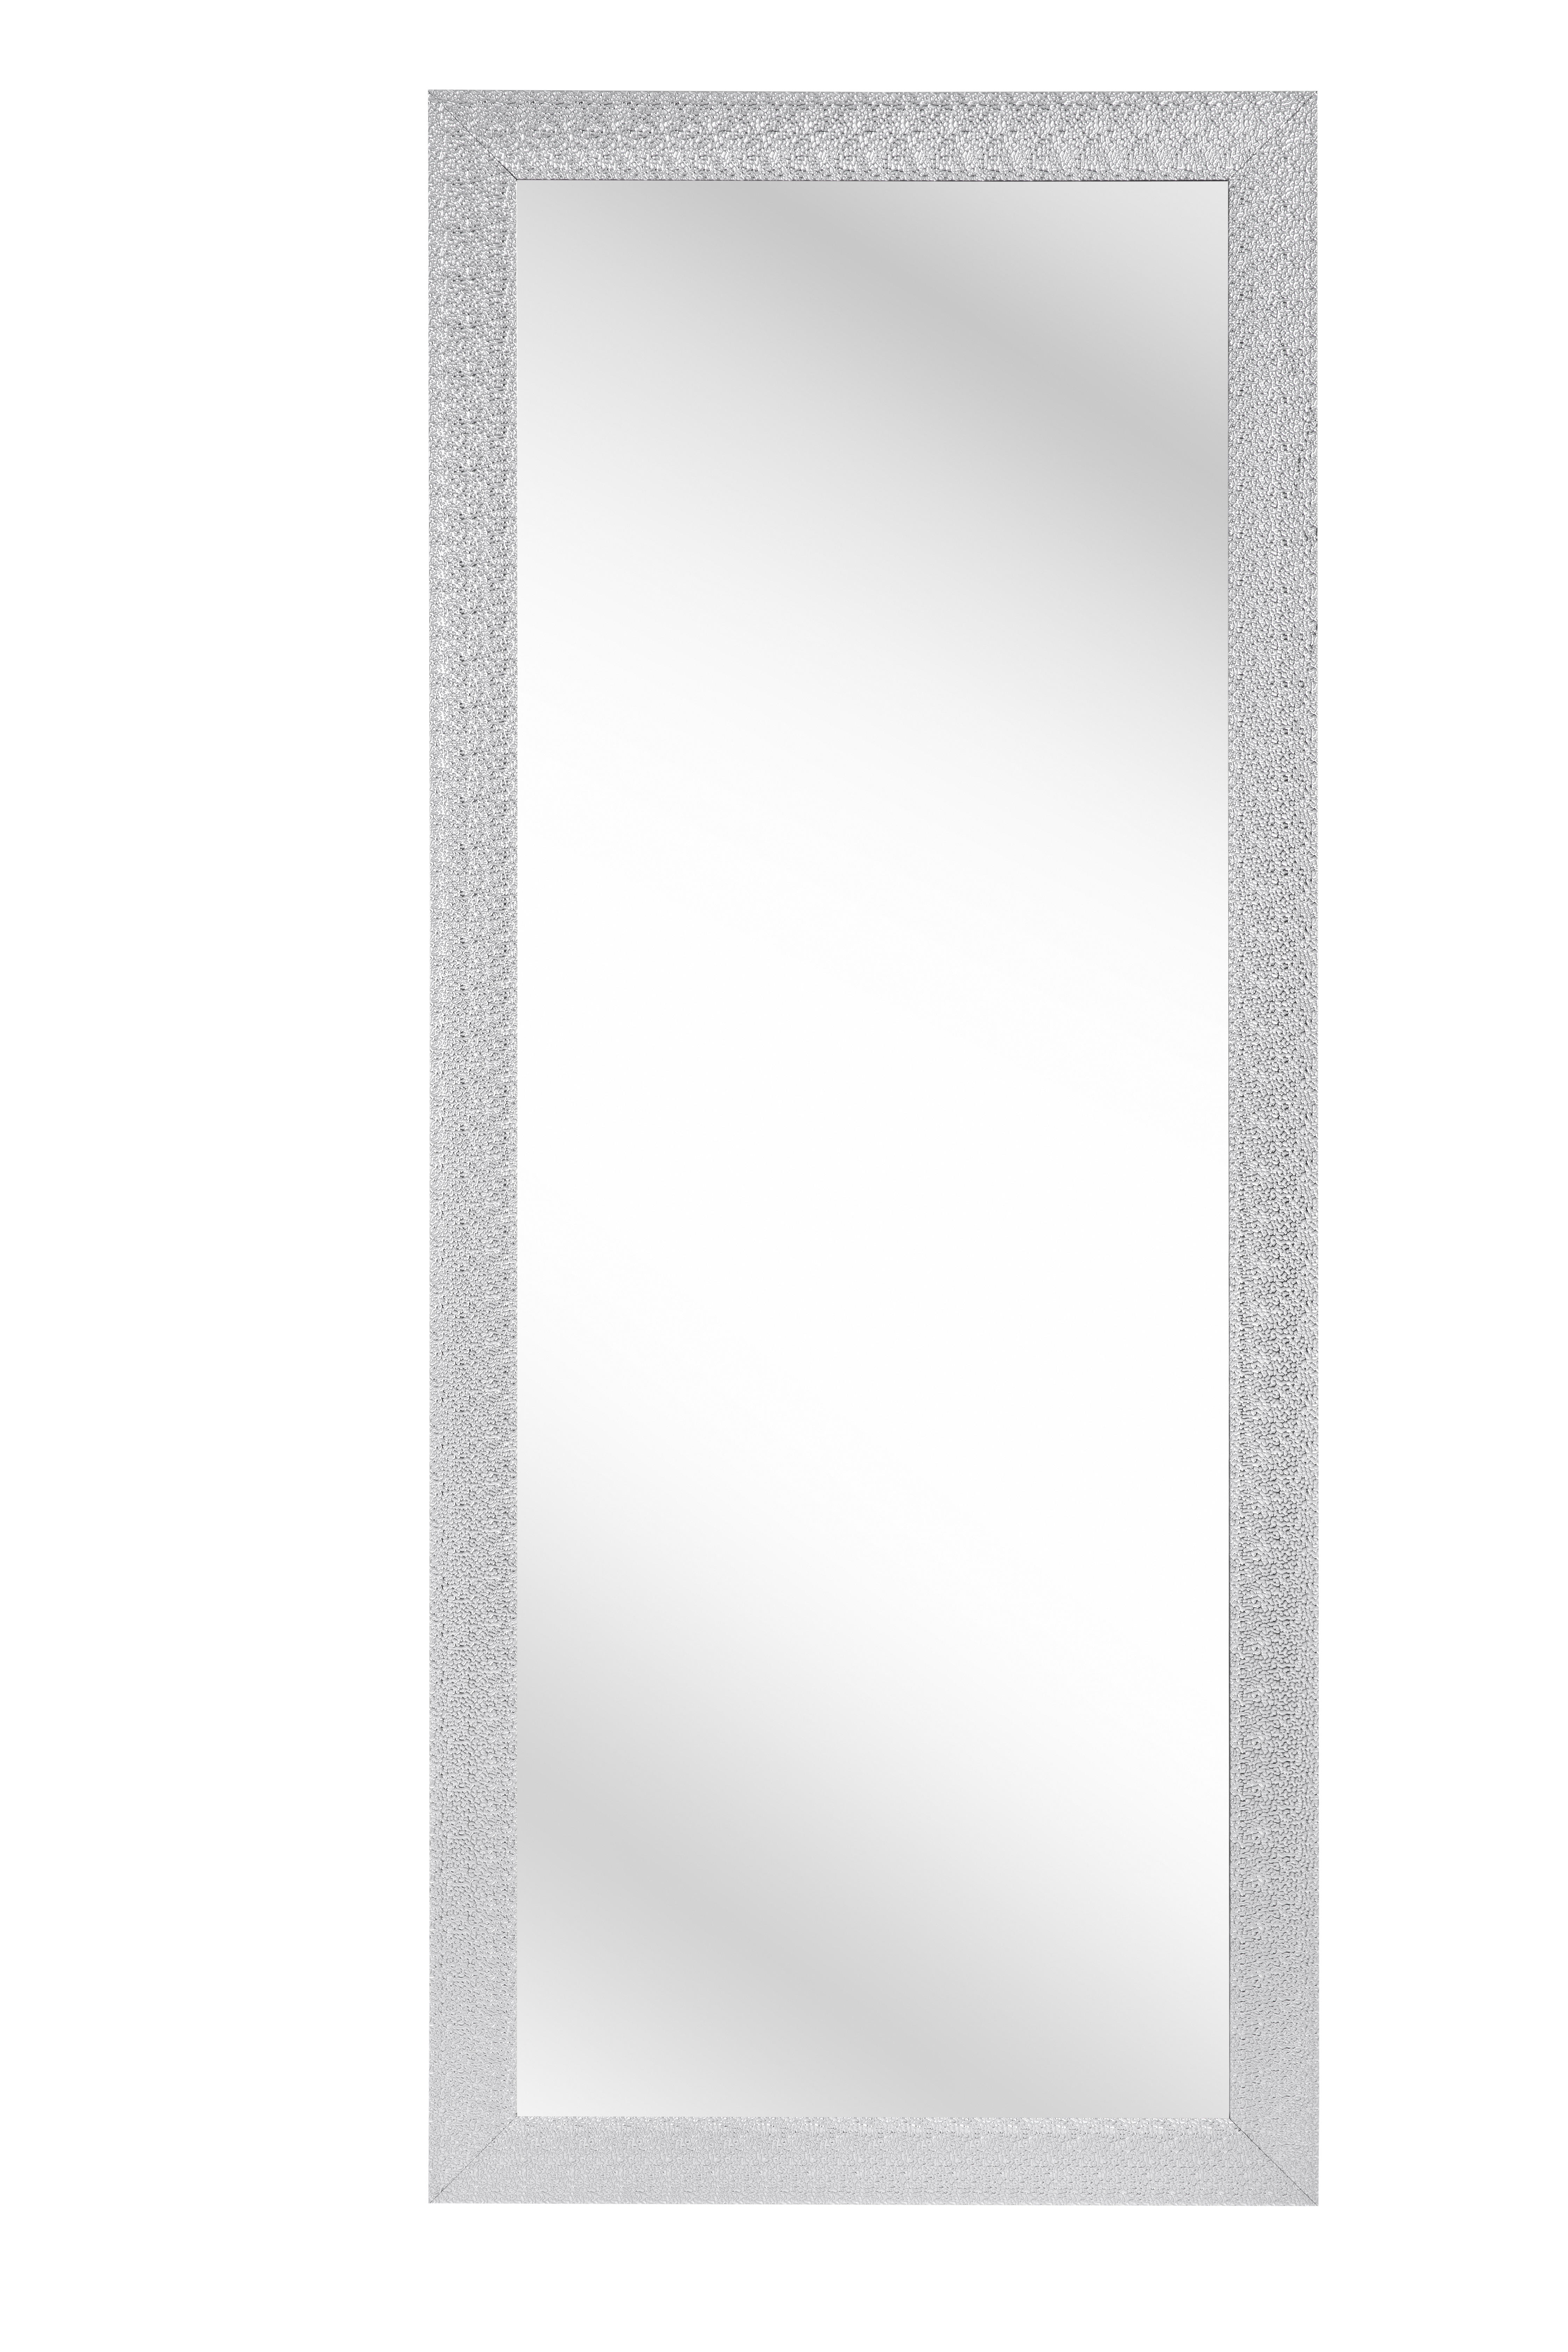 WANDSPIEGEL 70/170/2 cm  - Silberfarben, Lifestyle, Glas/Kunststoff (70/170/2cm) - Carryhome